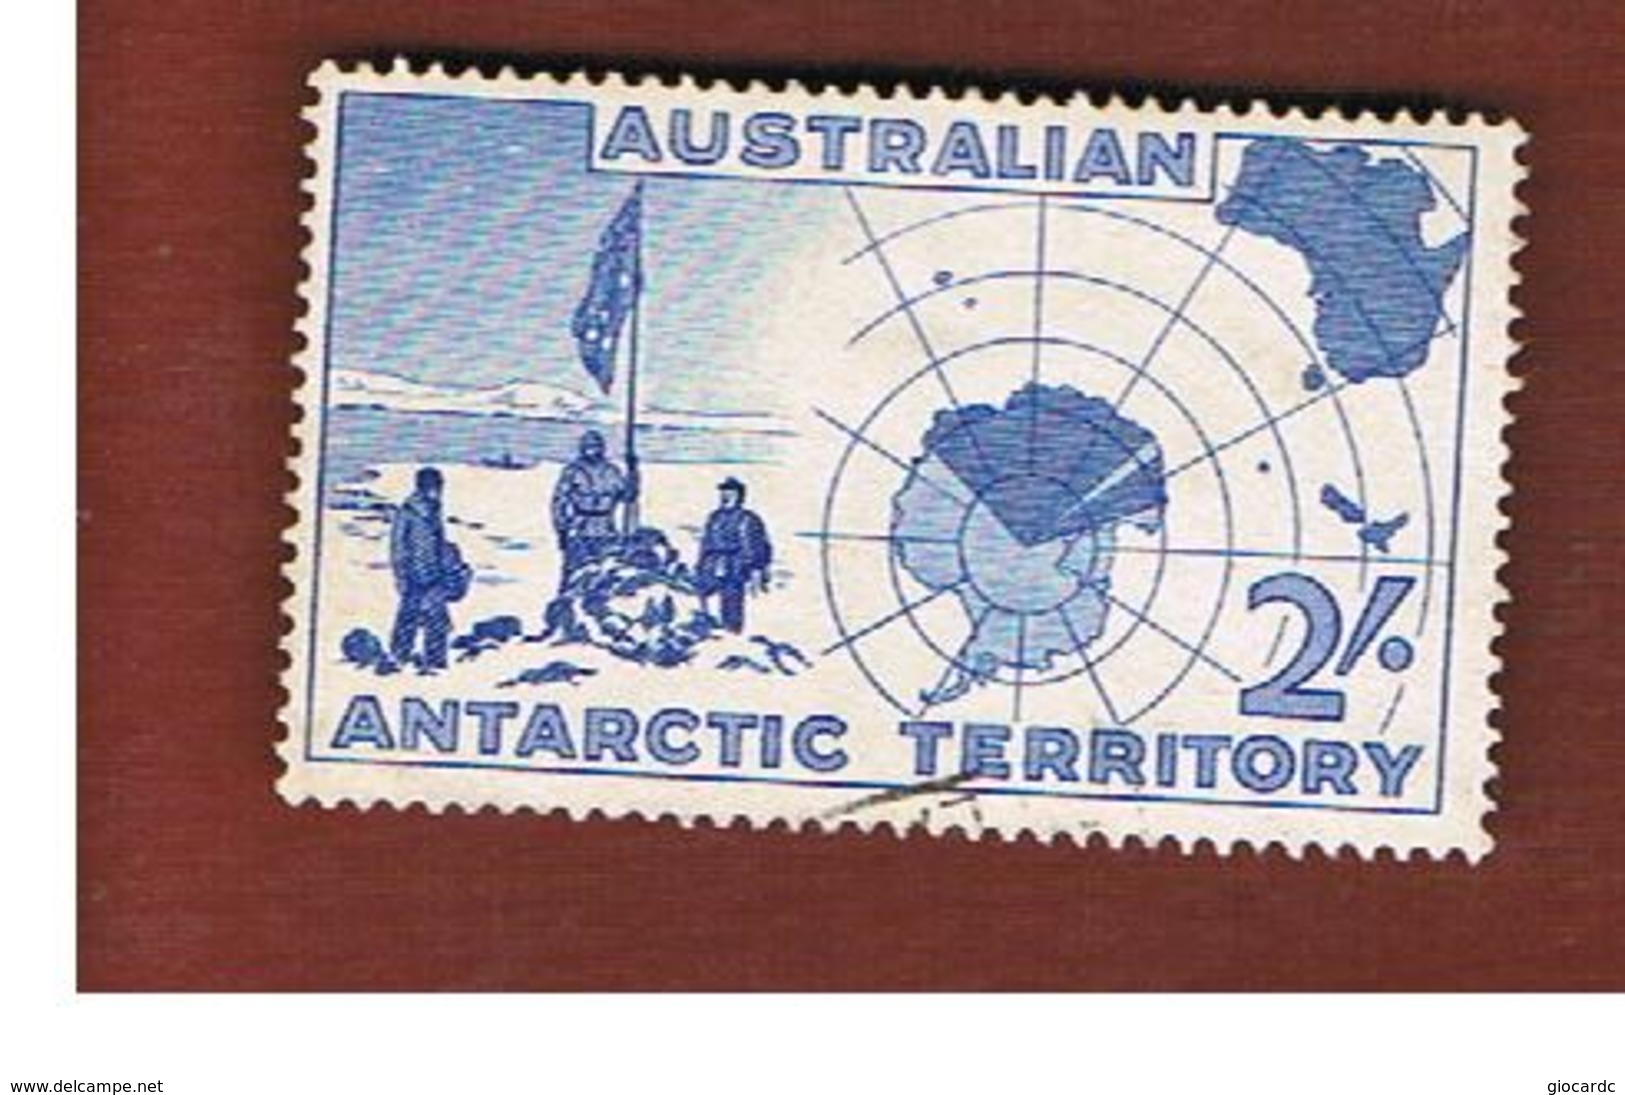 TERRITORI ANTARTICI AUSTRALIANI (AAT AUSTRALIAN ANTARCTIC TERRITORY) SG 1 - 1957 EXPEDITION AT VESTFOLD HILLS  -  USED - Usati